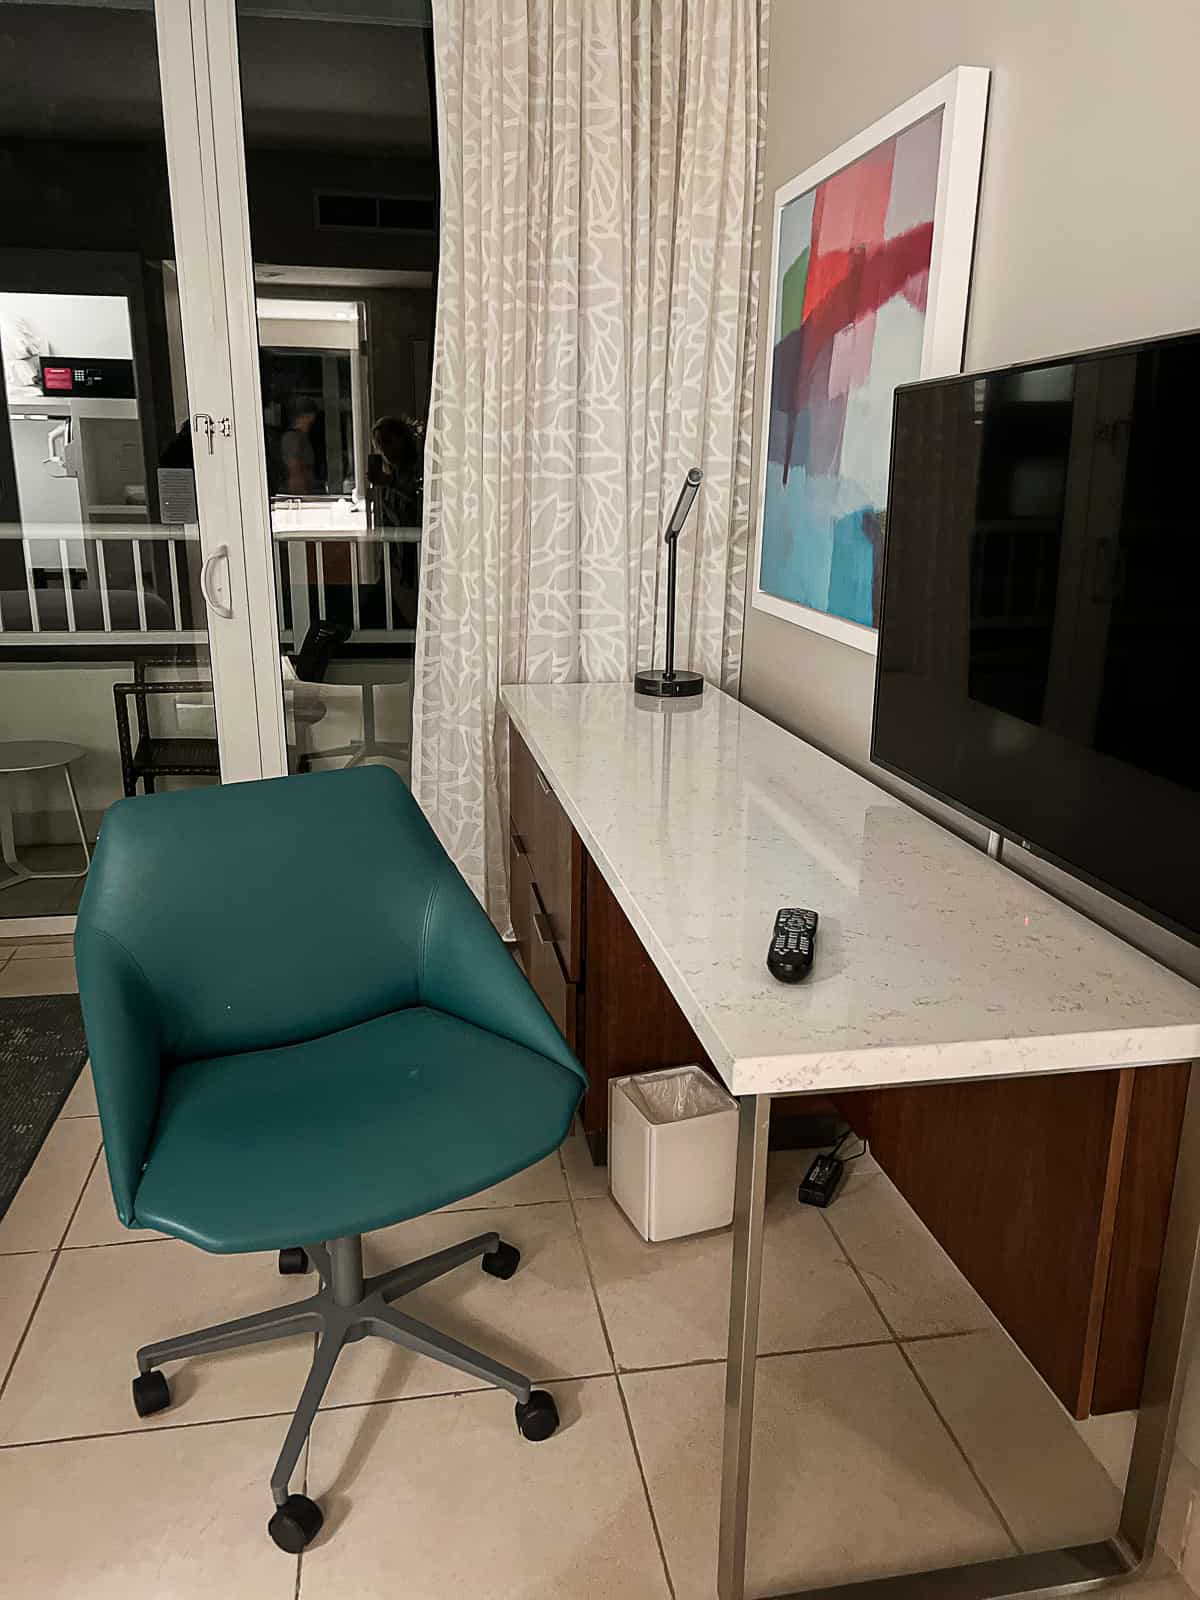 Caribe Hilton Suite Room Desk with TV Amenities